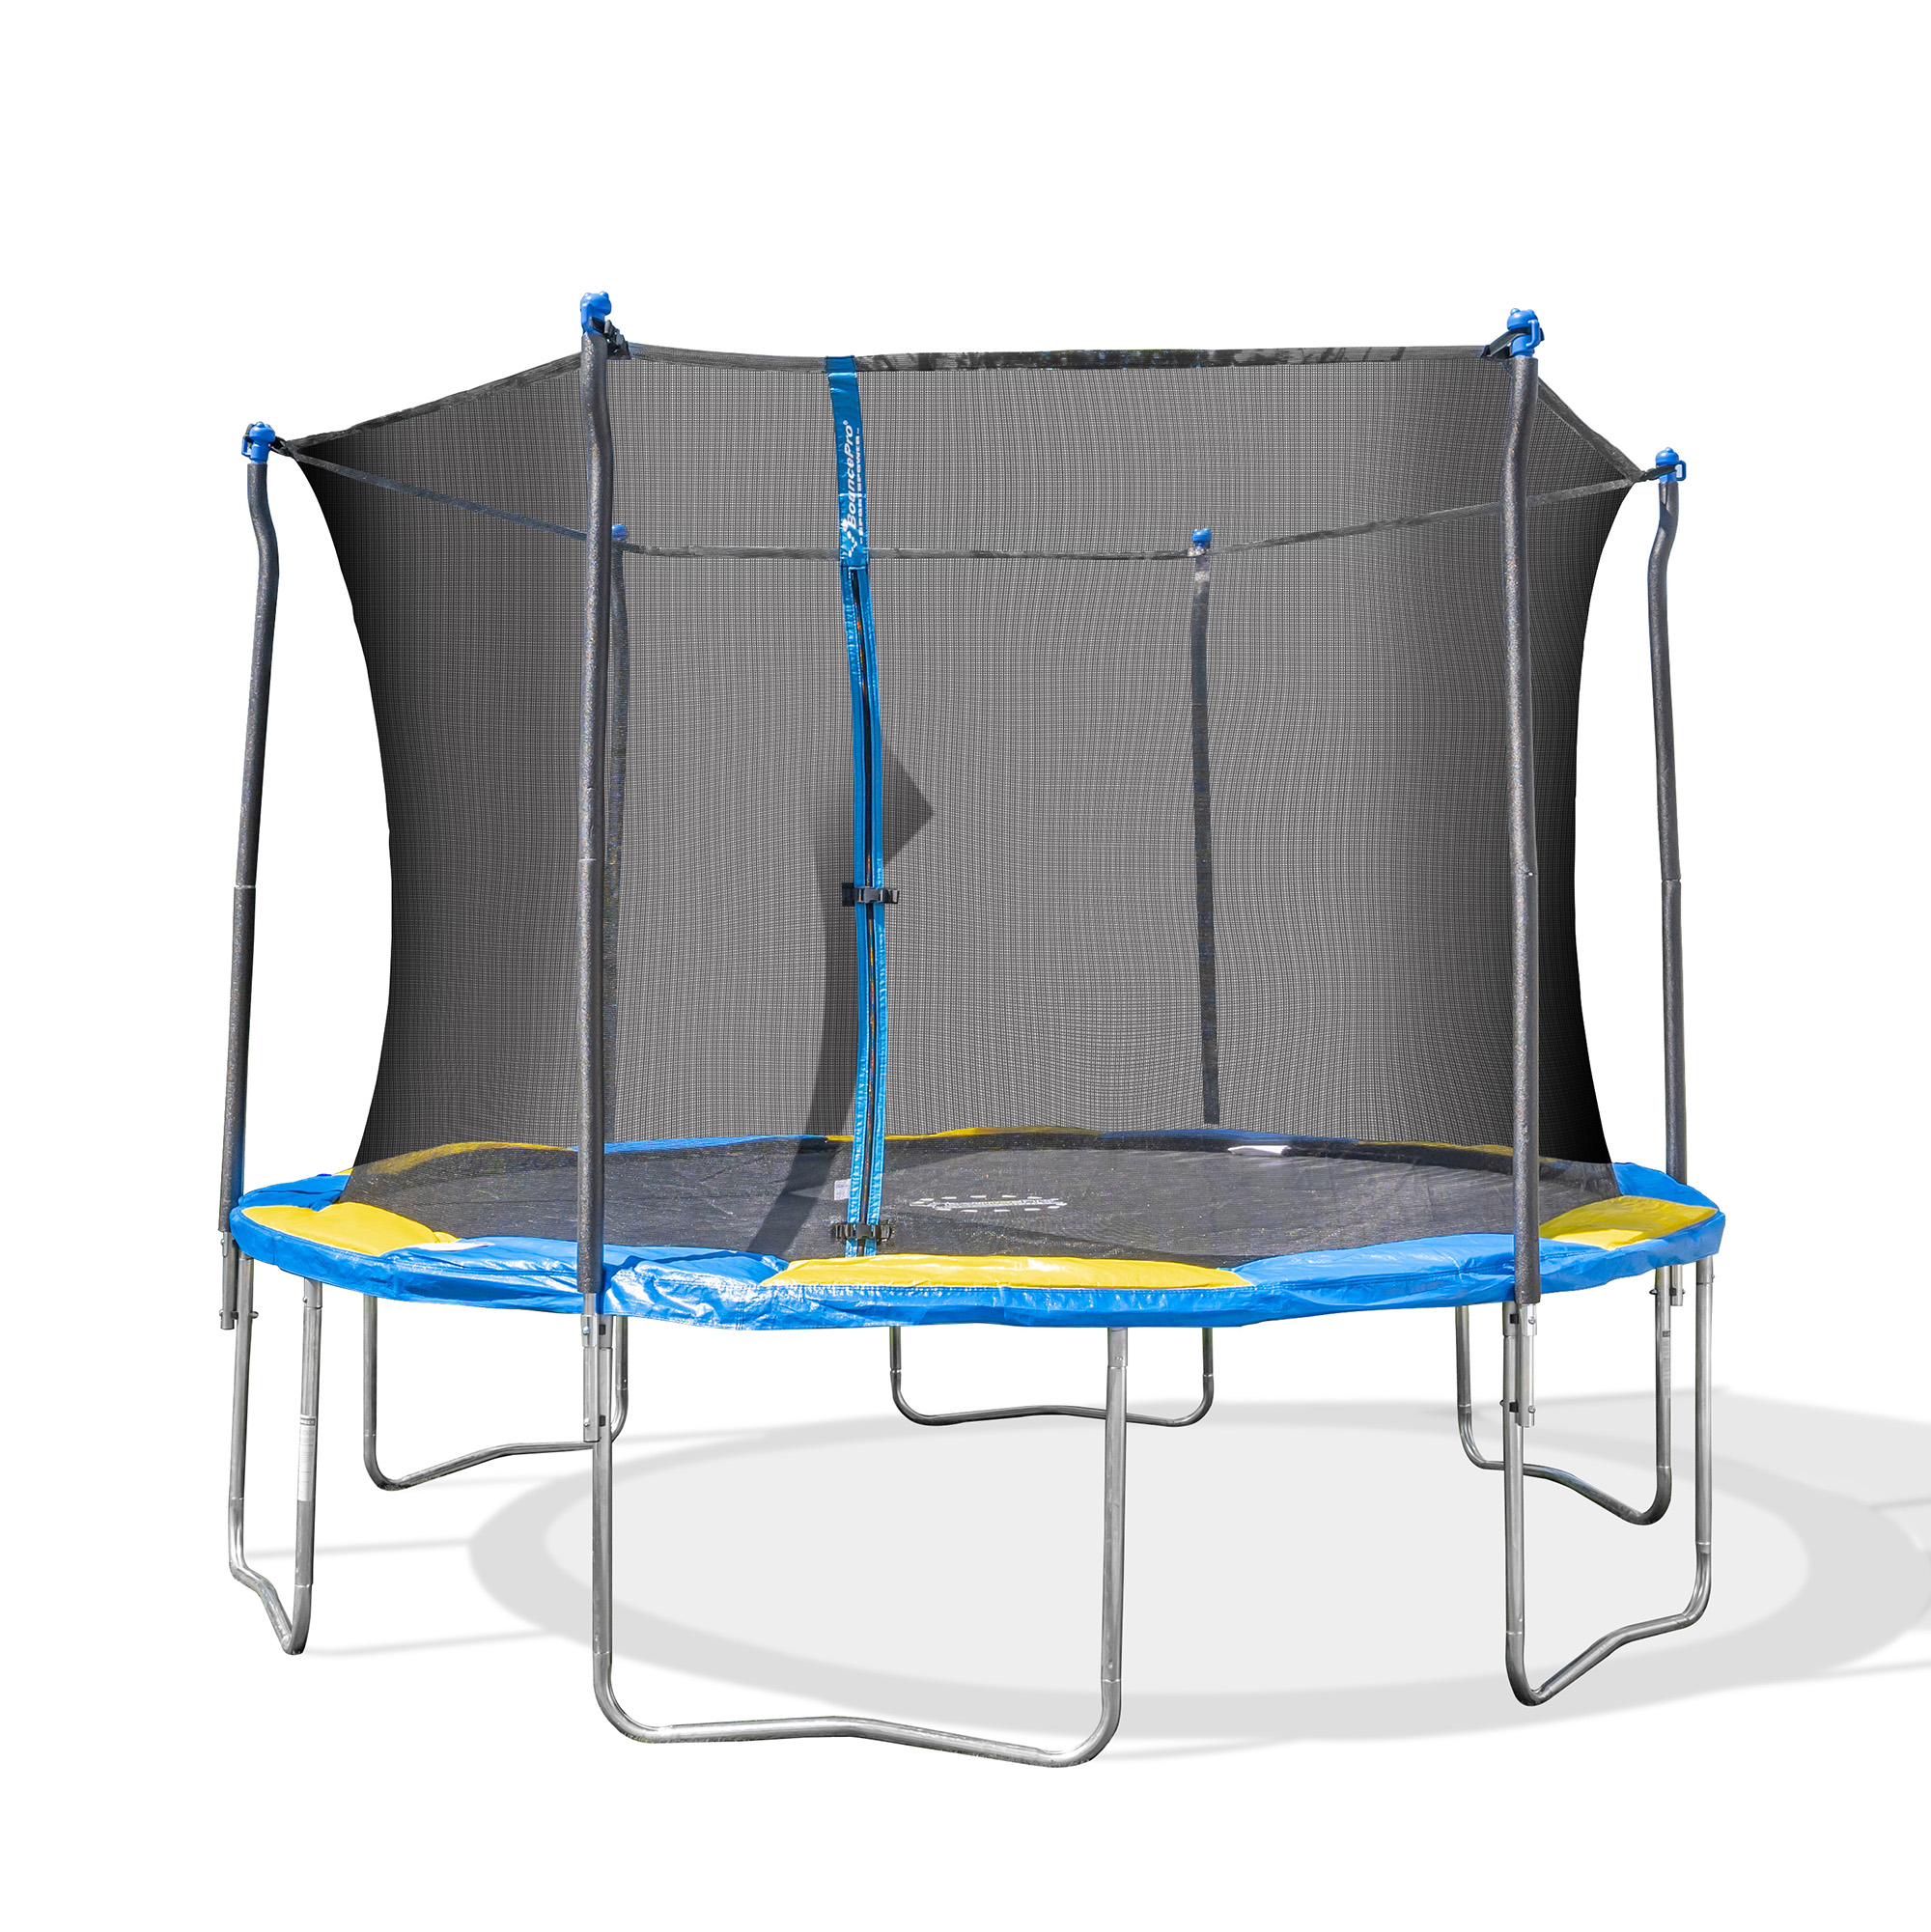 Bounce Pro Safety Enclosure Net Trampoline, 12-Feet